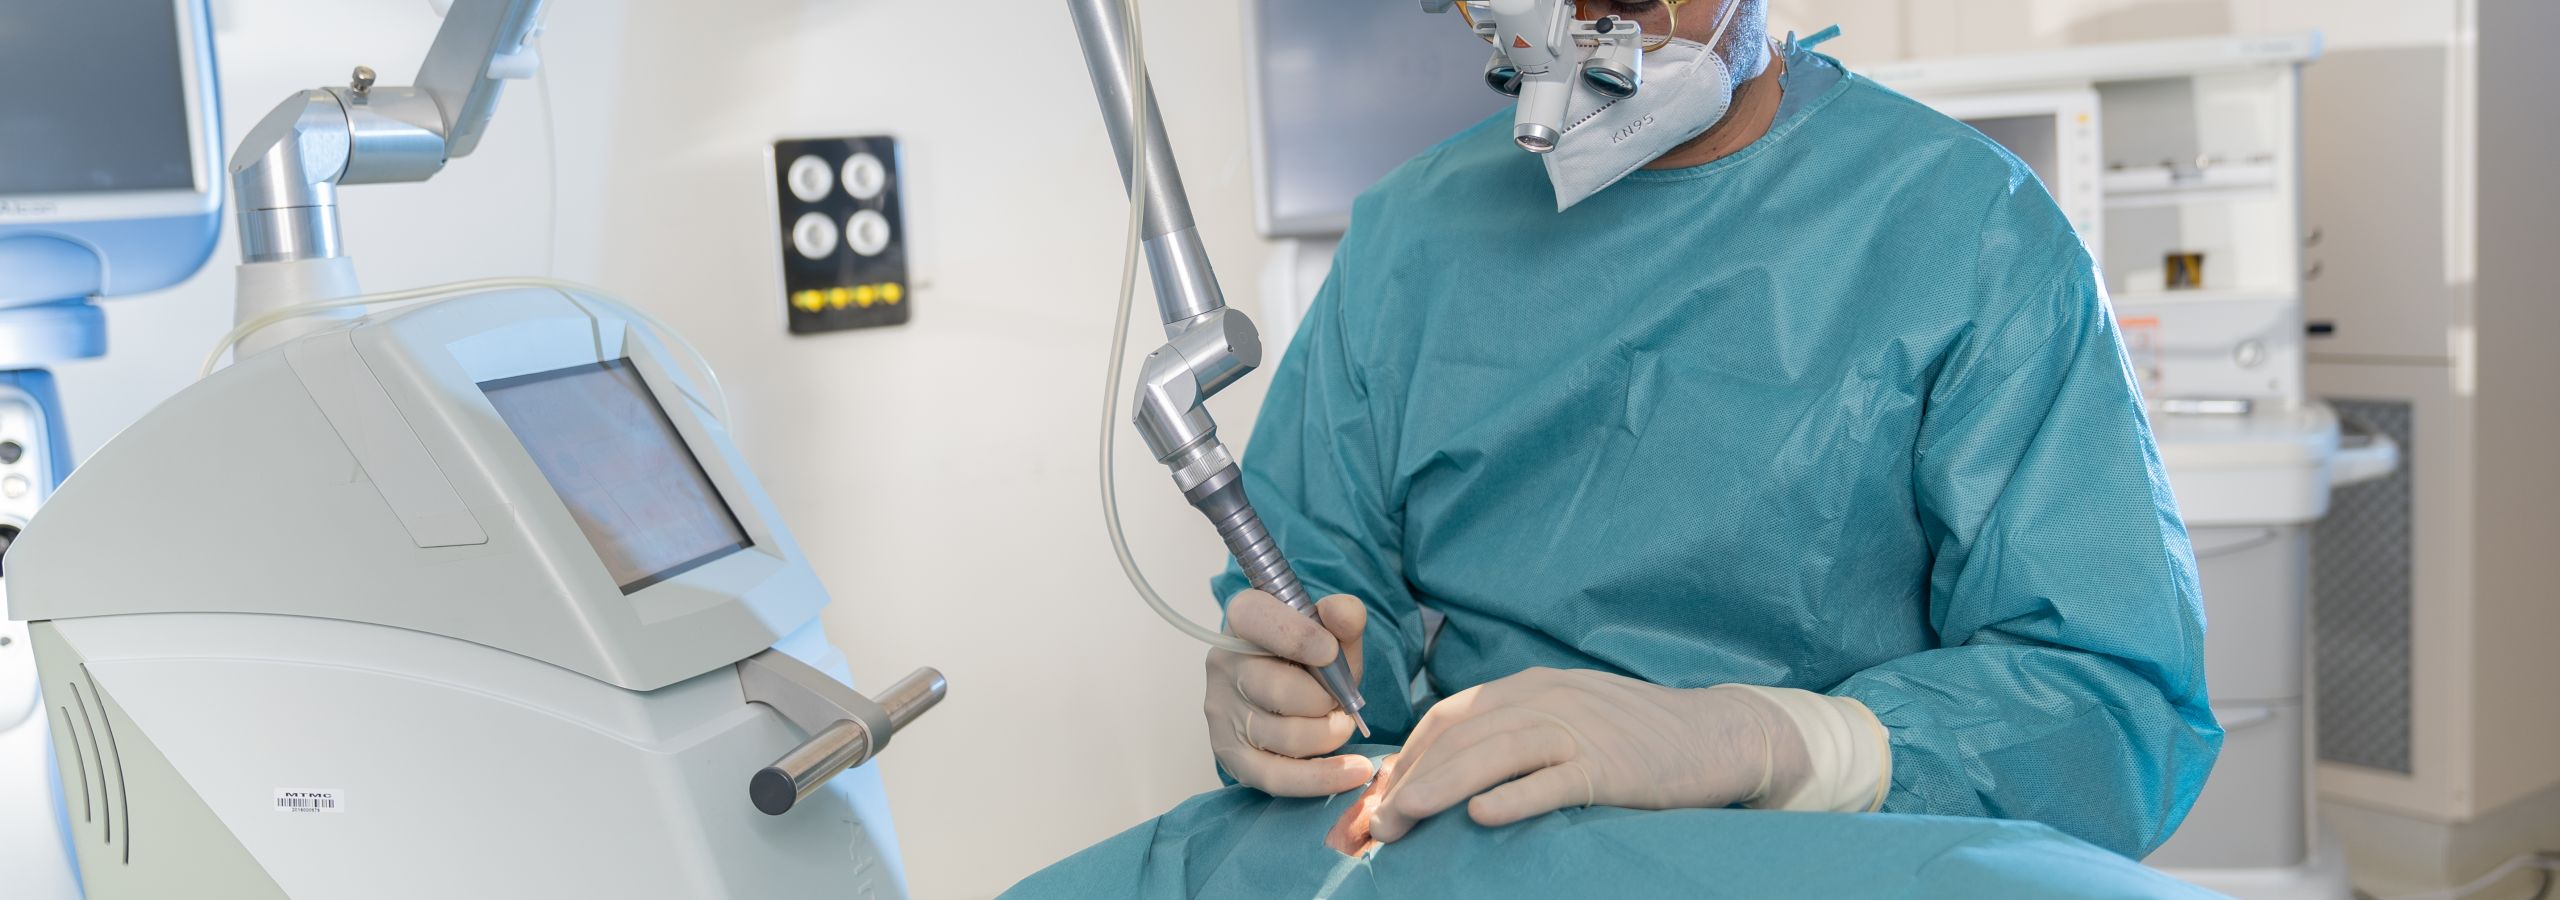 Operación Blefaroplastia láser a paciente